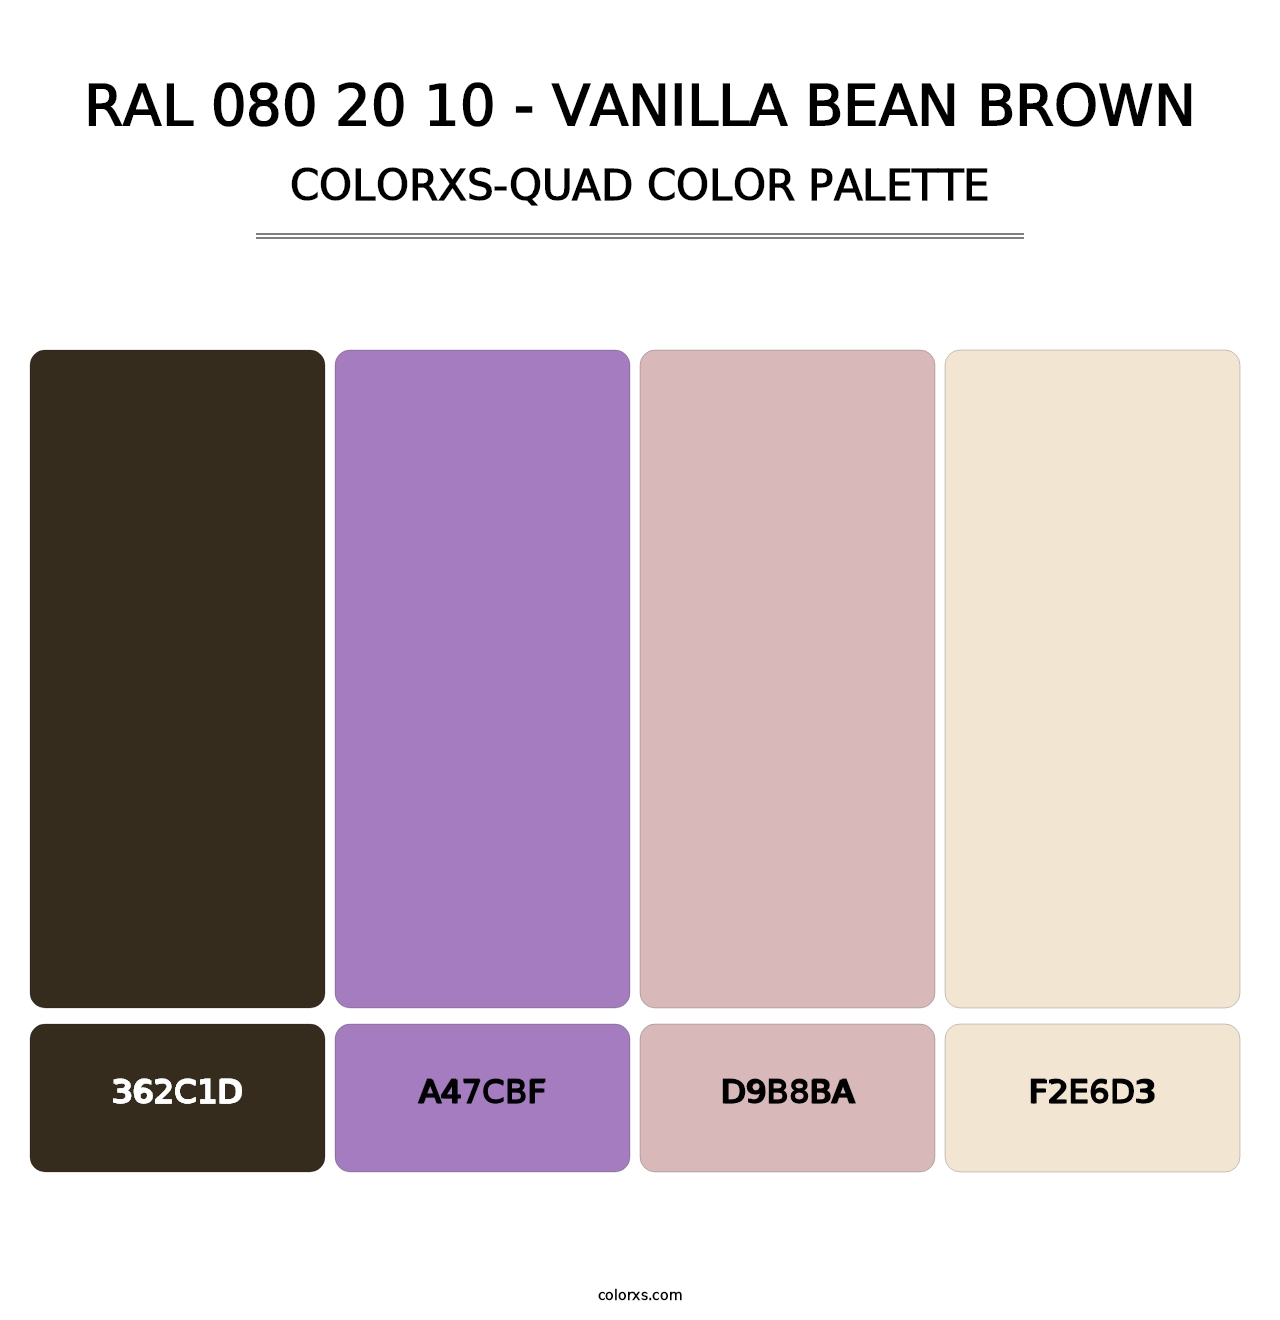 RAL 080 20 10 - Vanilla Bean Brown - Colorxs Quad Palette